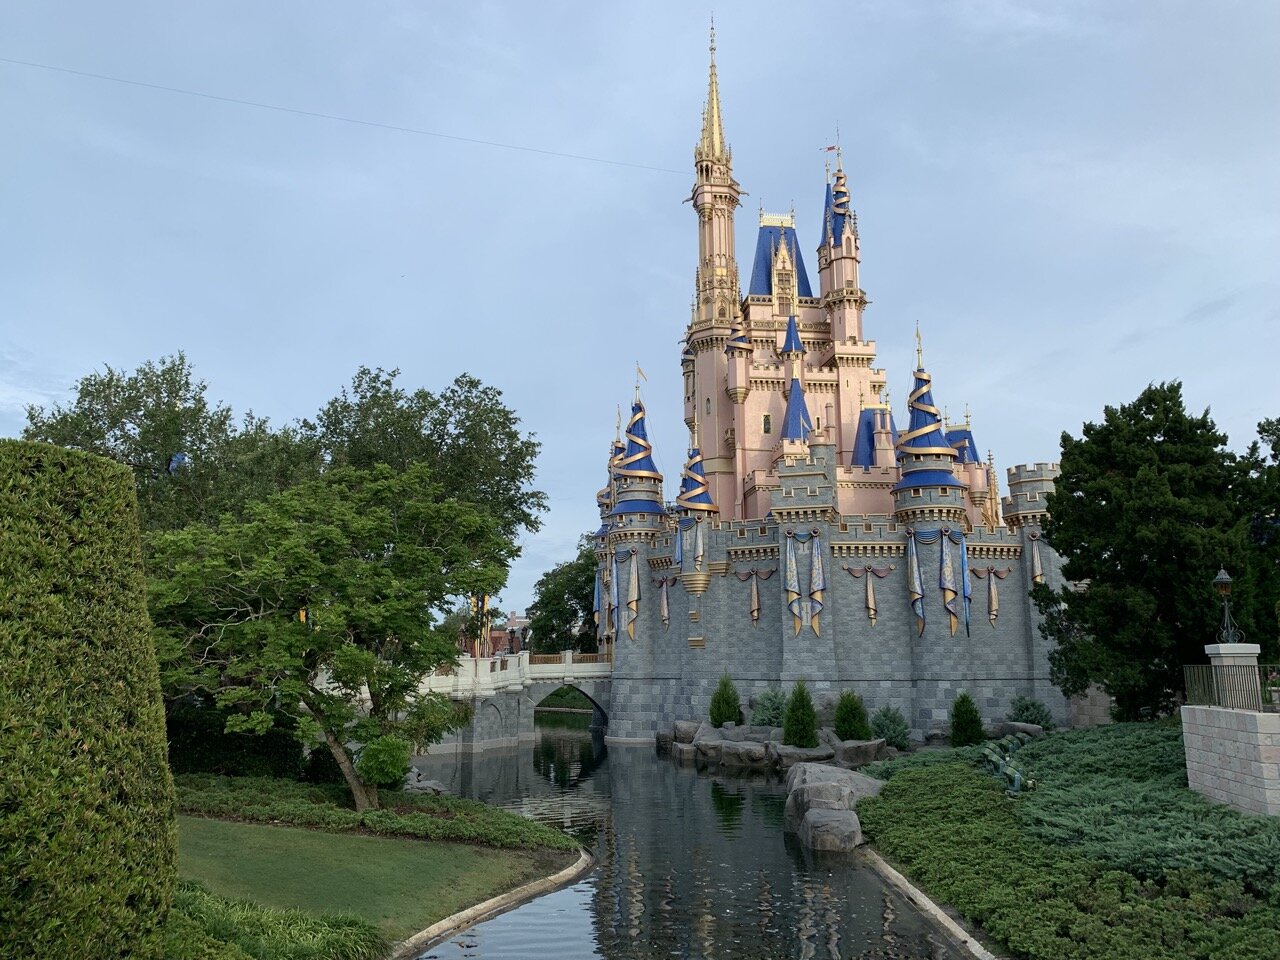 Make It Real Disney Princess 5 in 1 Activity Tower - Disney